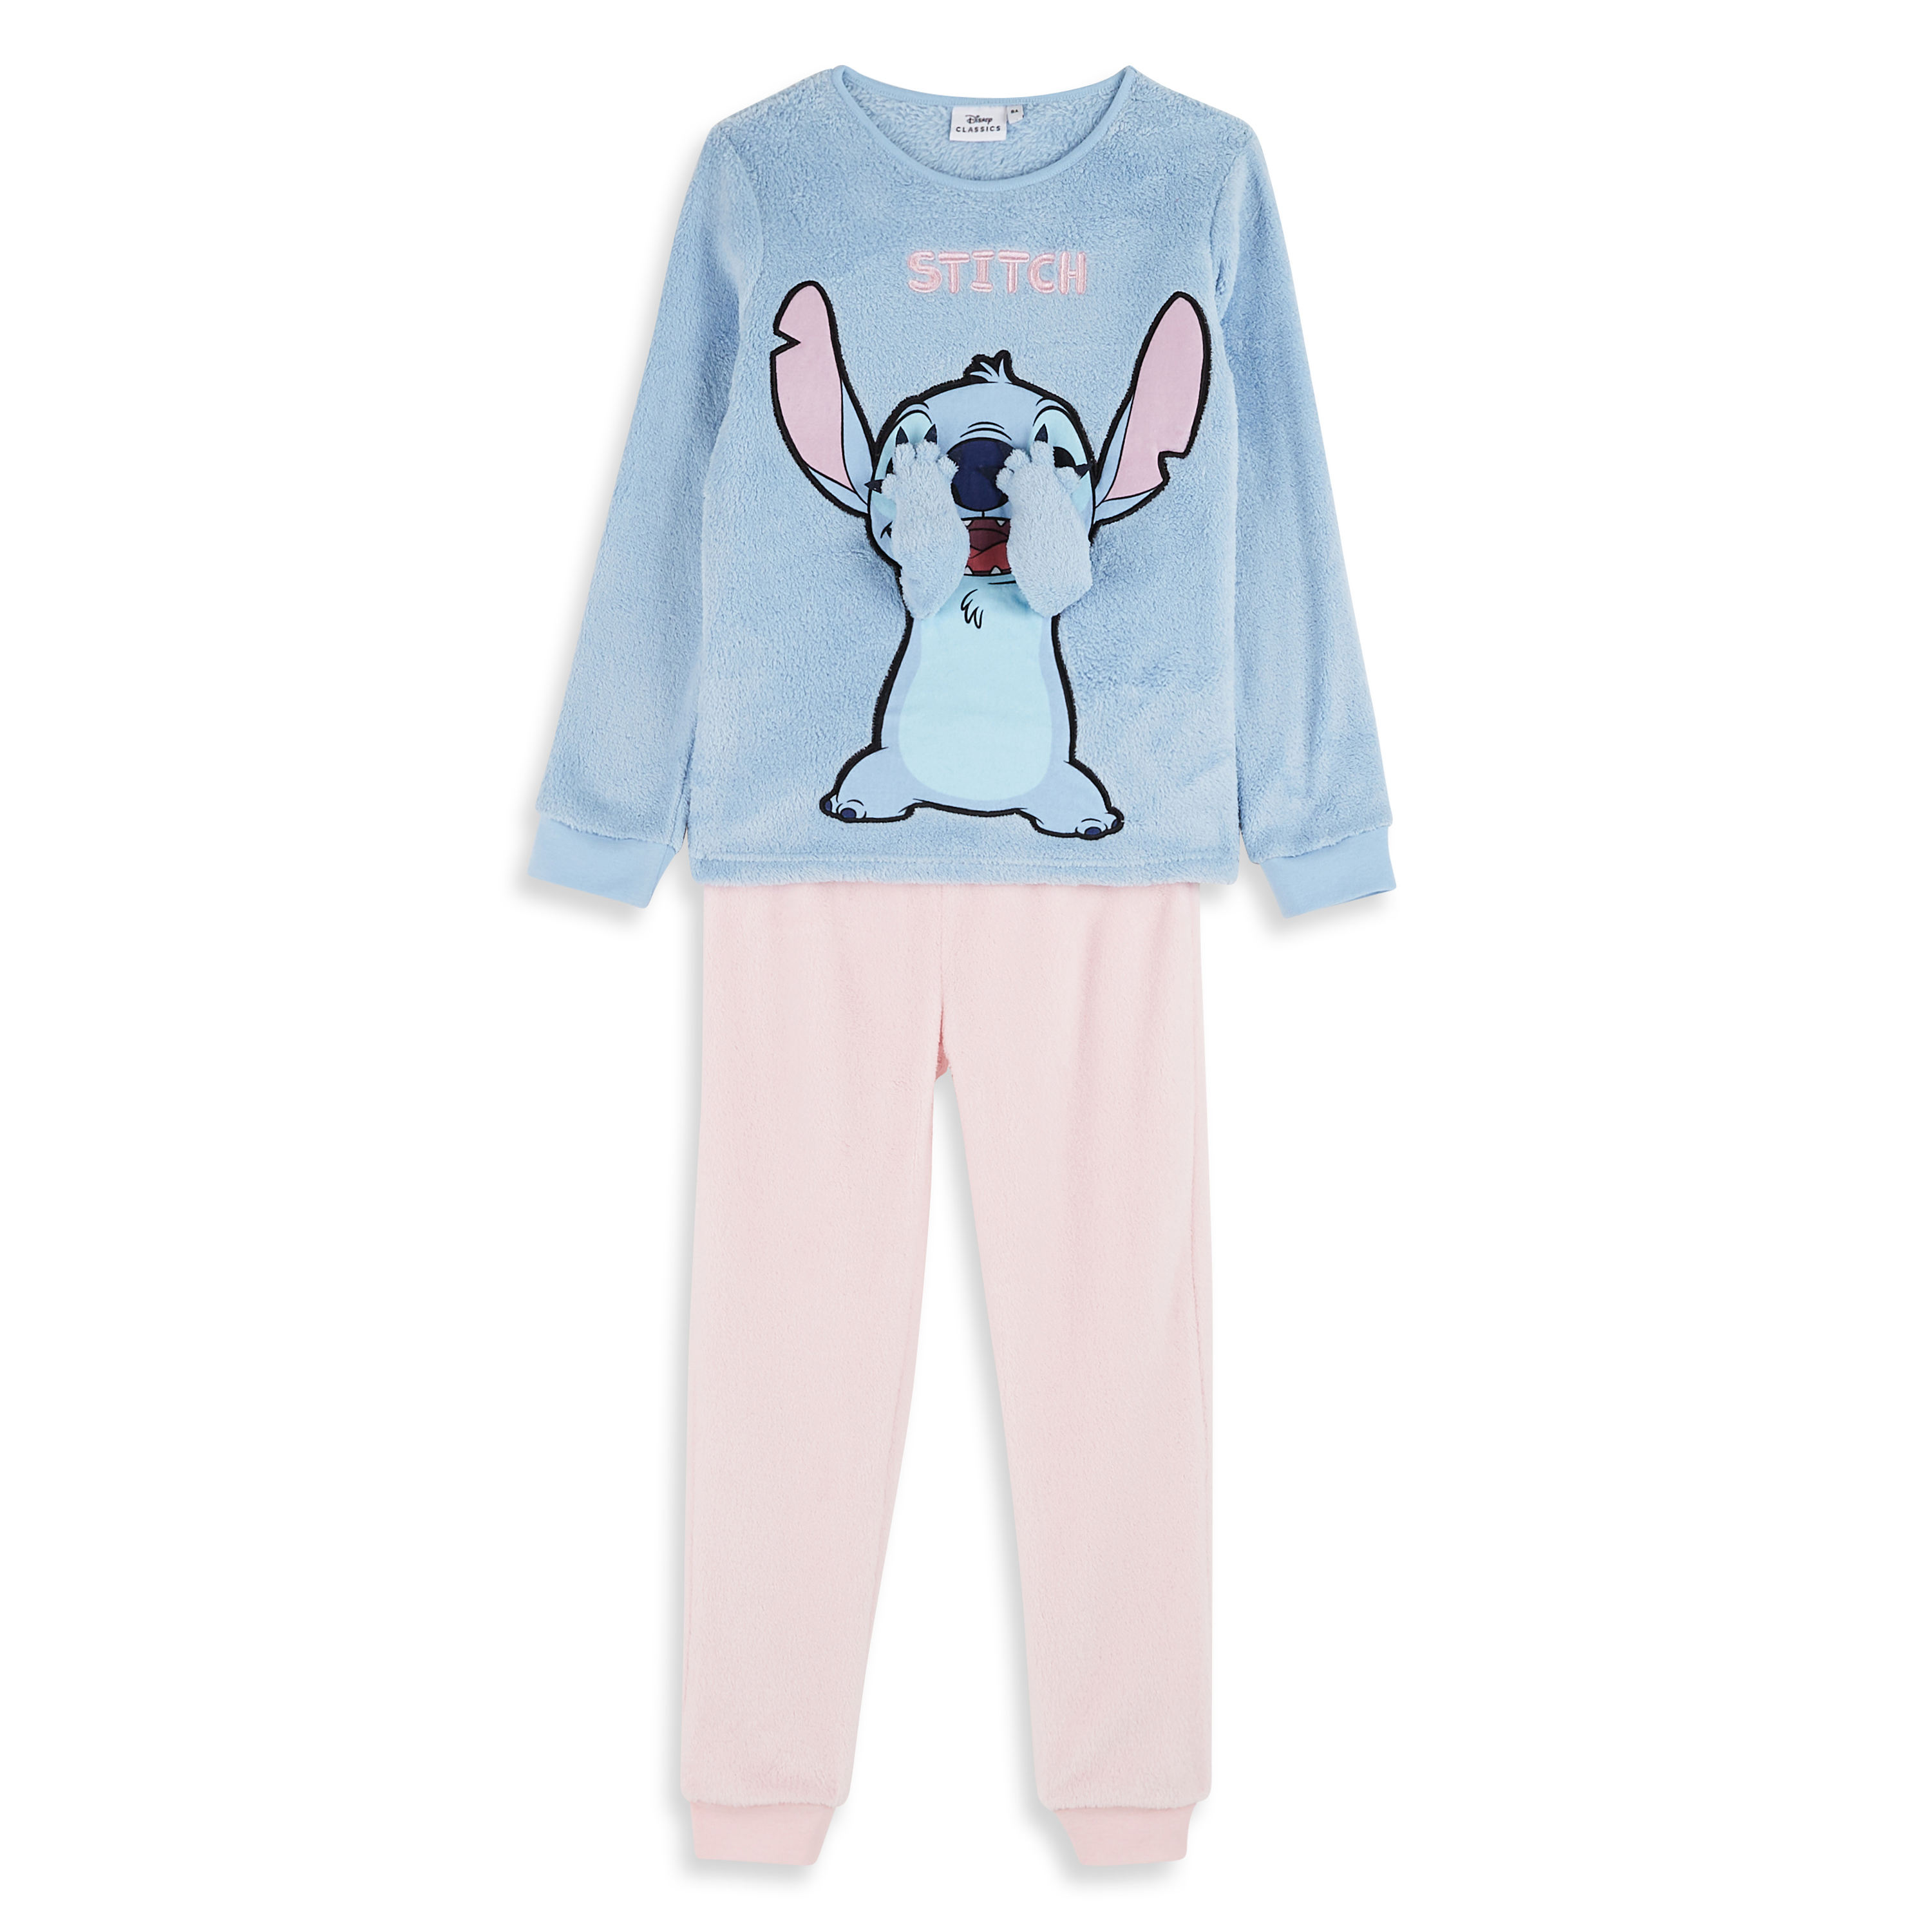 Combinaison Pyjama Fille Stitch Bleu